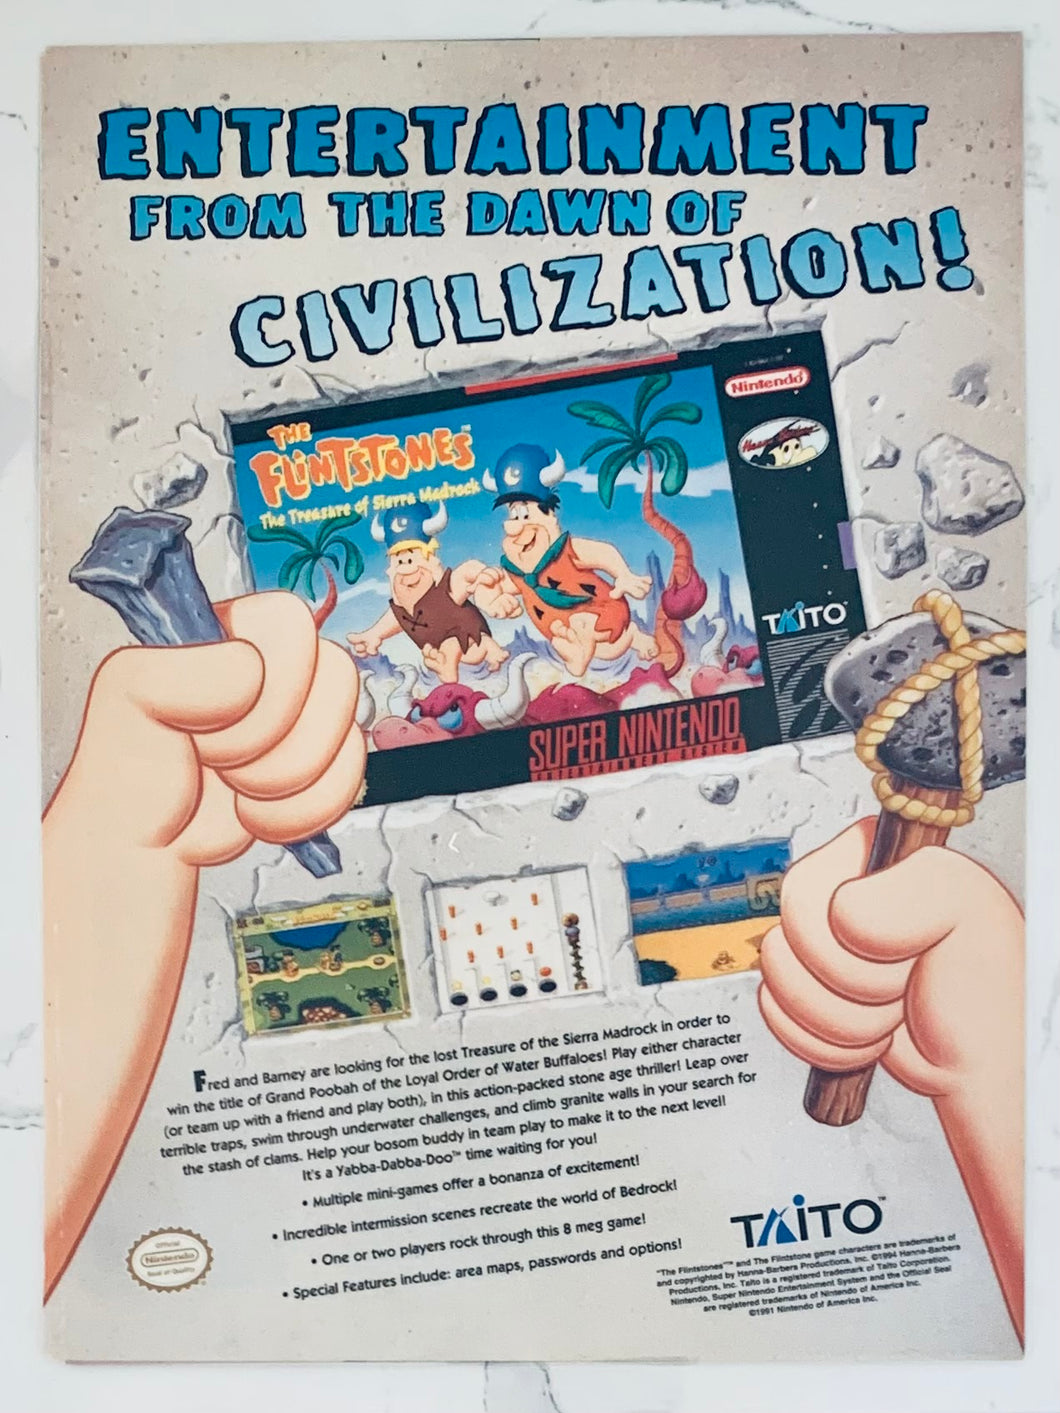 The Flintstones: The Treasure of Sierra Madrock - SNES - Original Vintage Advertisement - Print Ads - Laminated A4 Poster